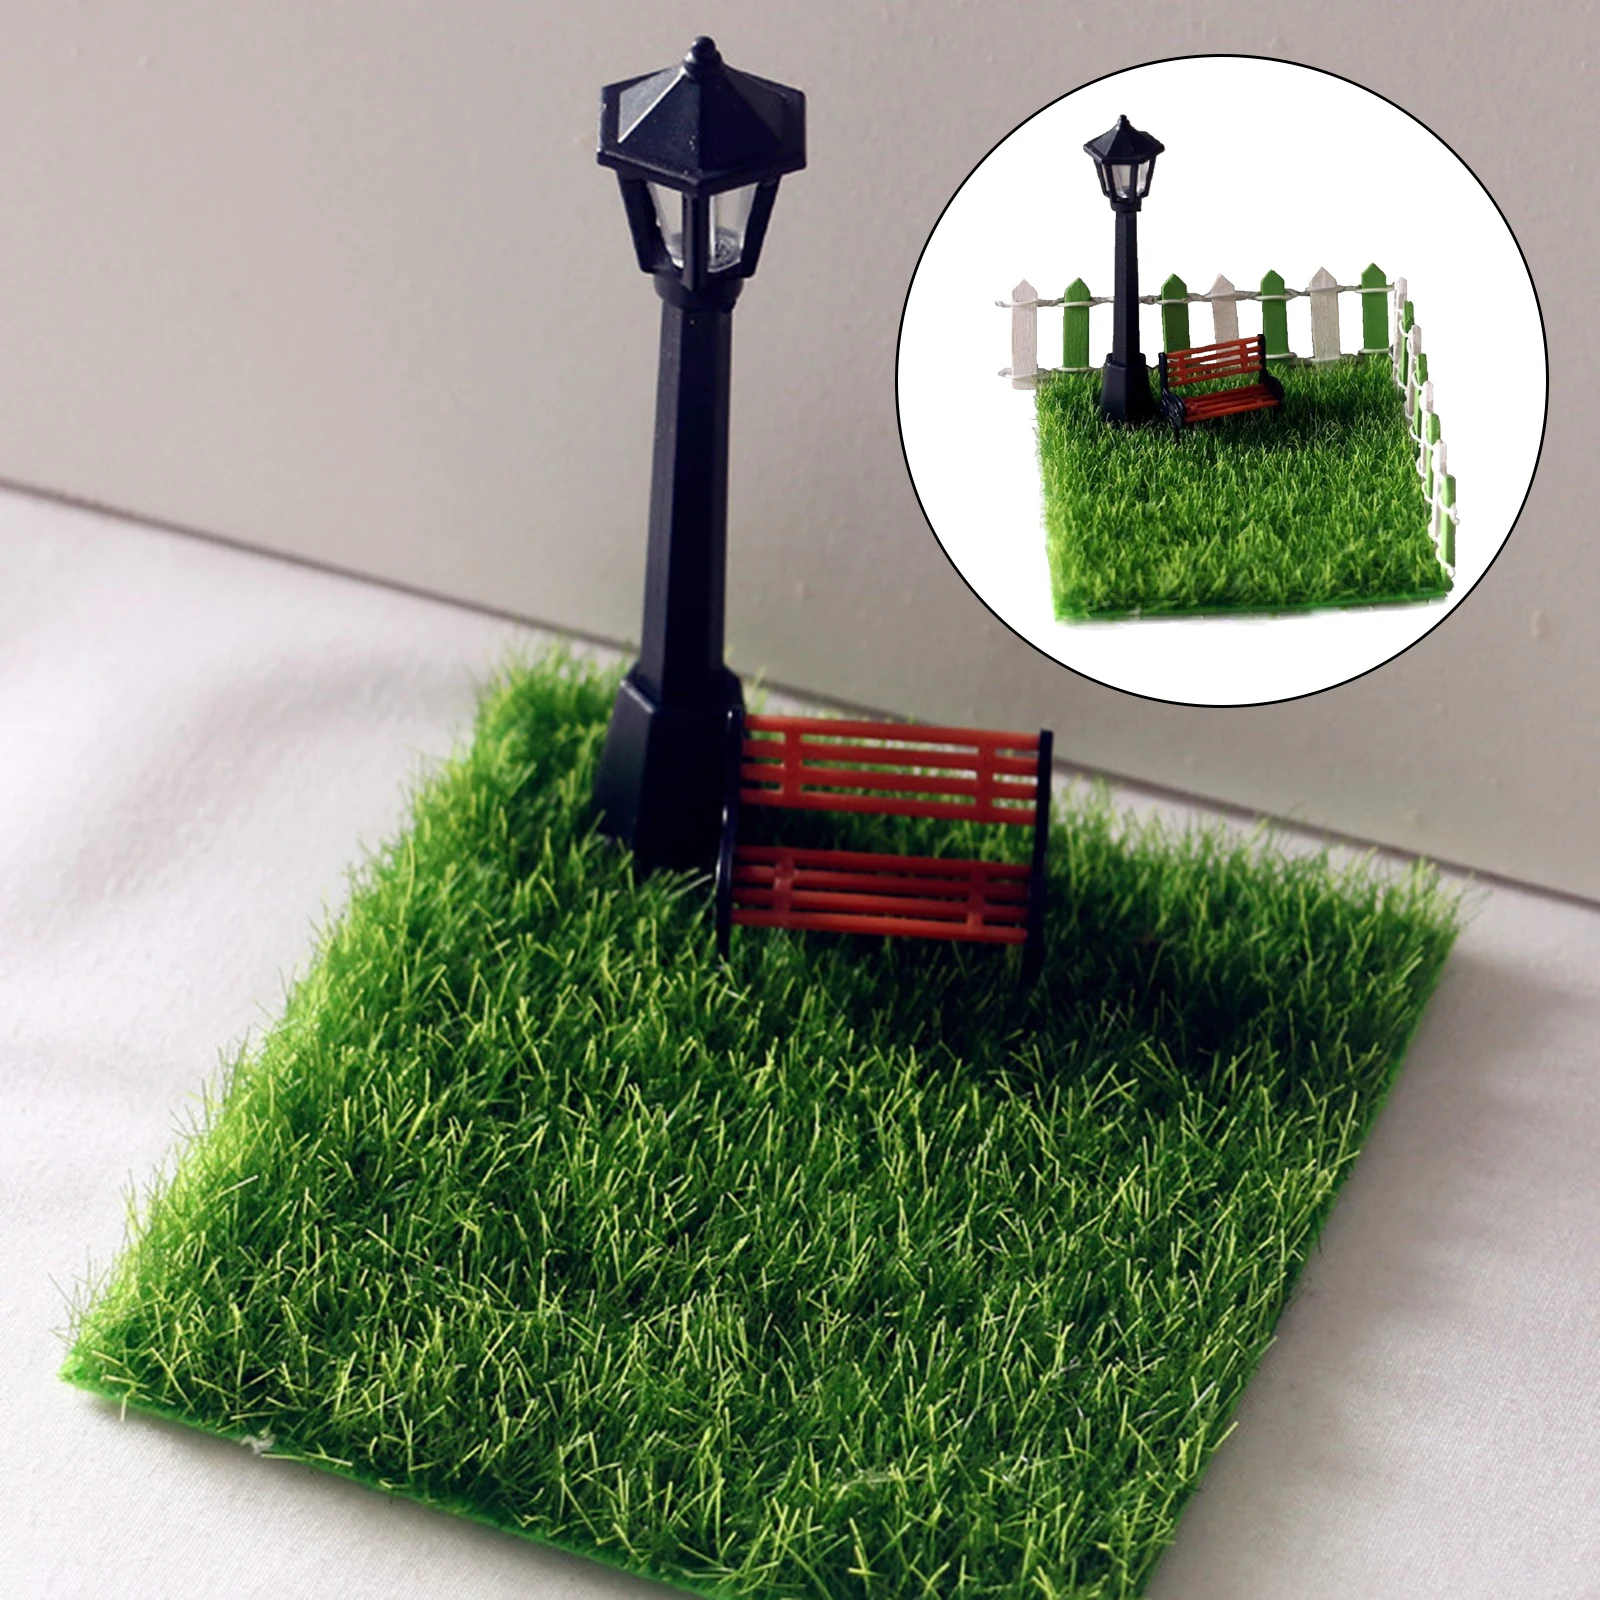 1/12 Doll House Miniature Fairy Garden Green Lawn Street Light Micro Landscape Patio Decoration Creative Furniture Set